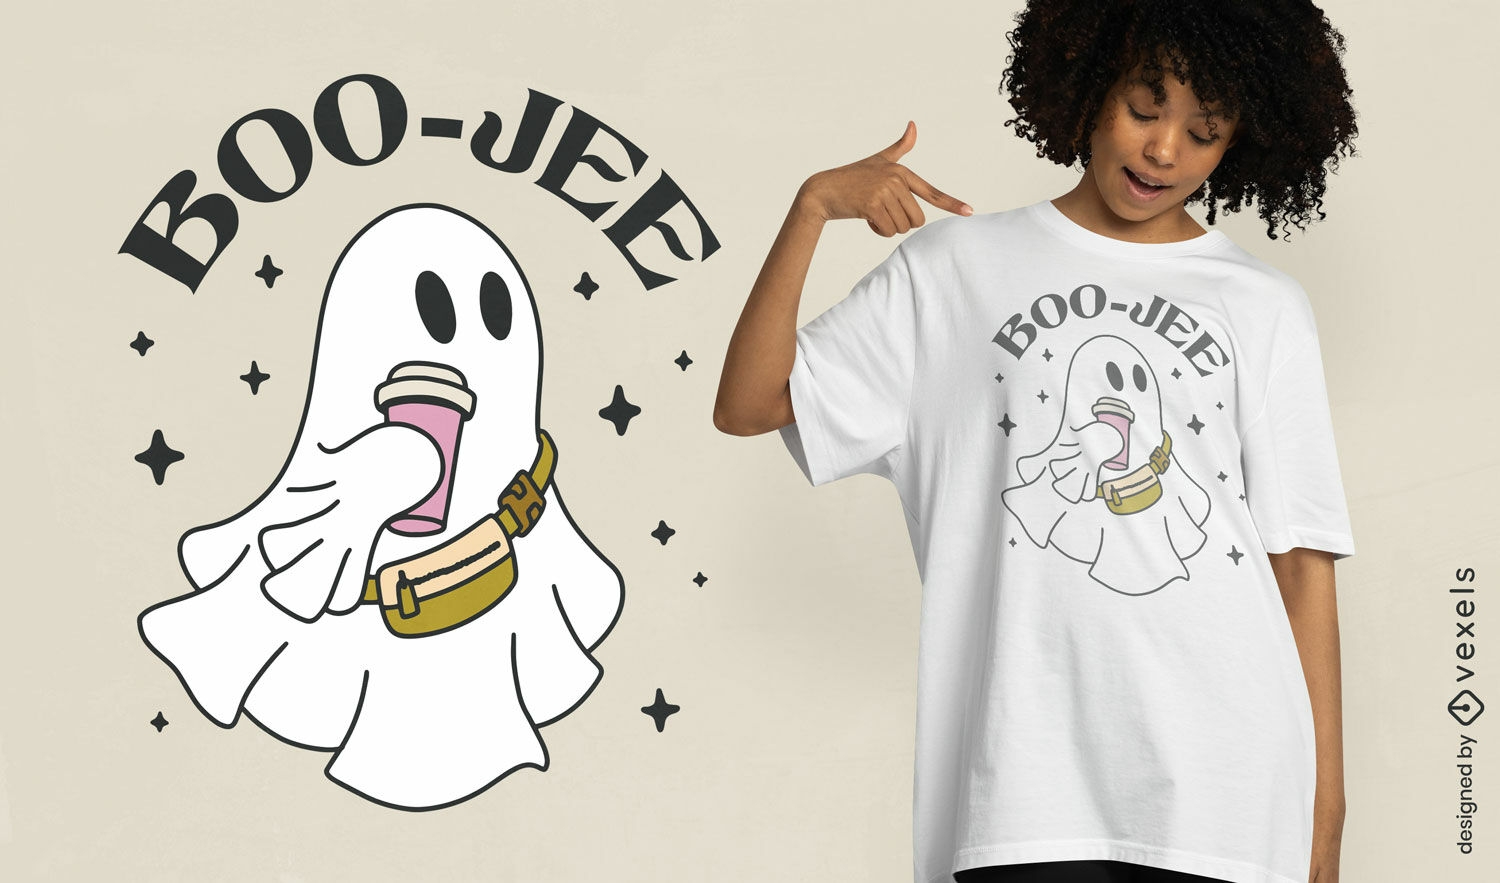 Diseño de camiseta fantasma boo-jee.